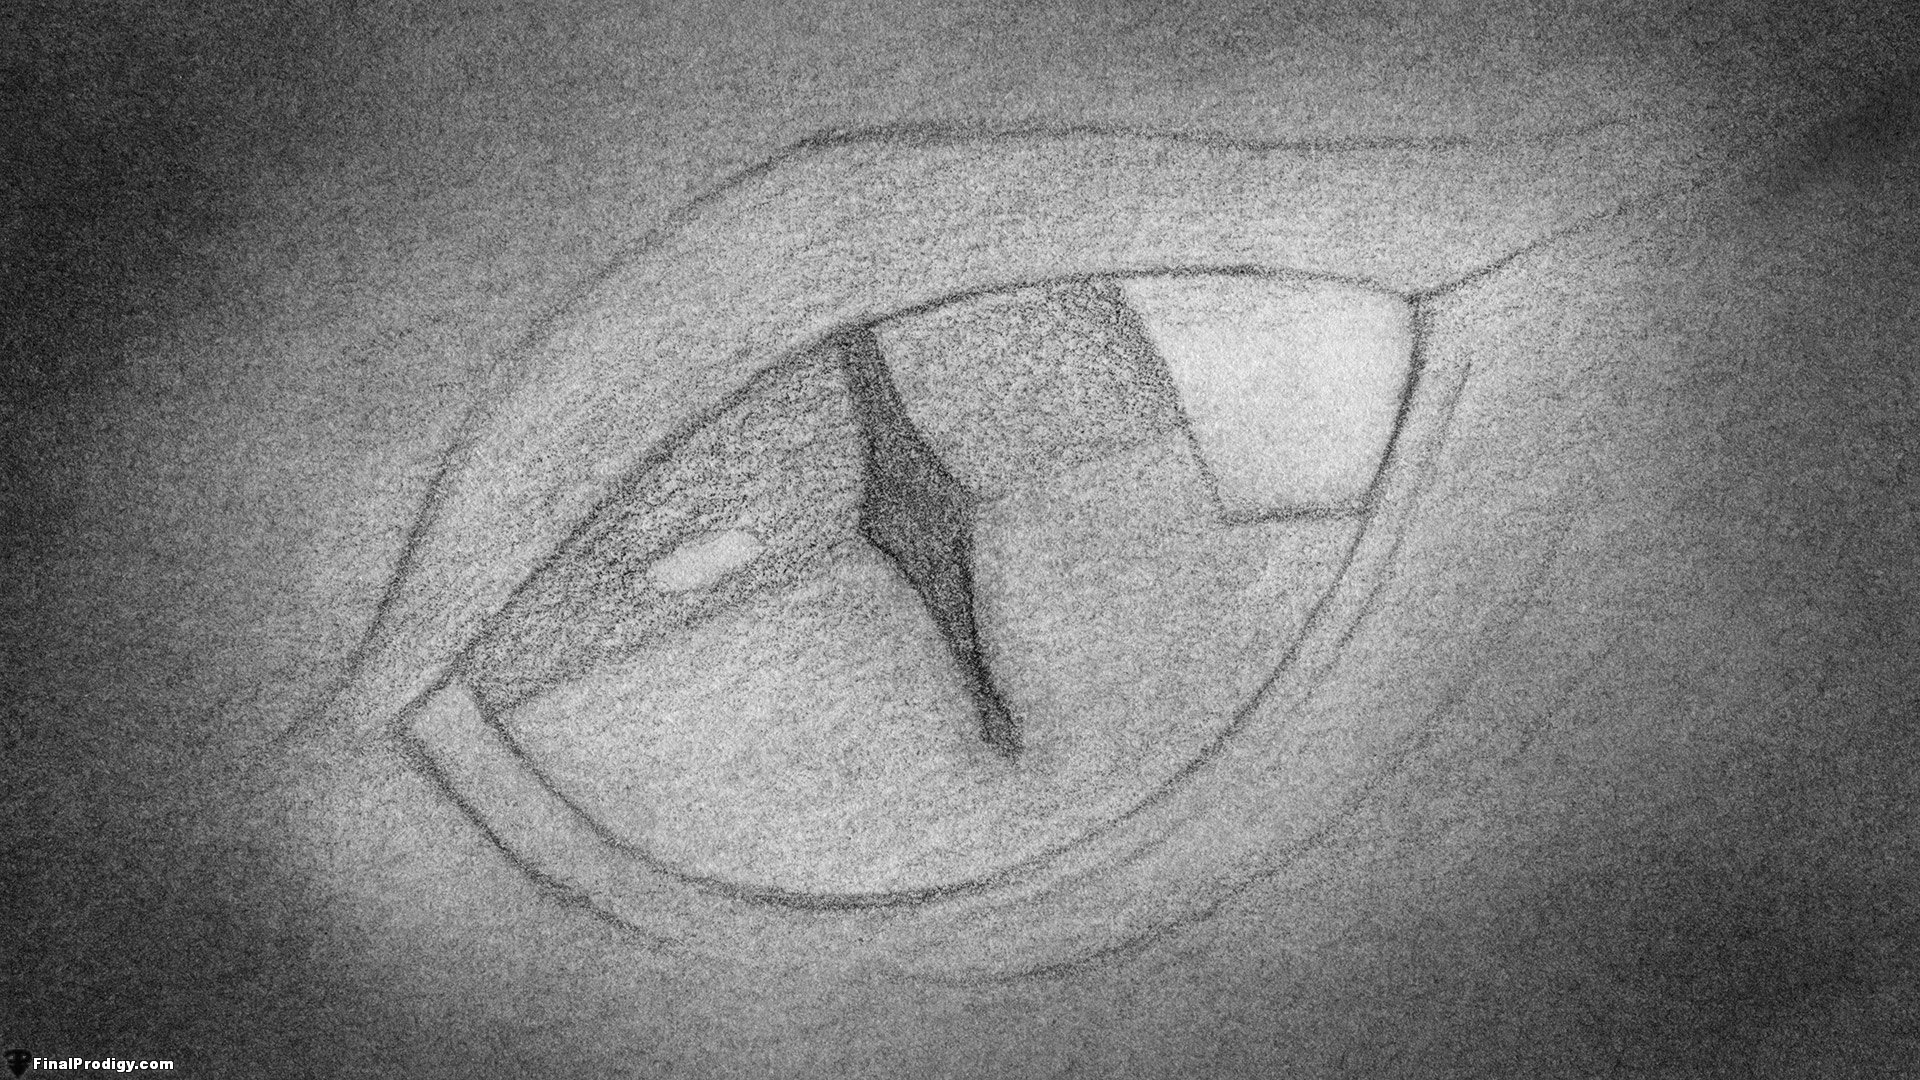 Smaug Dragon Eyes Drawing Beautiful Image